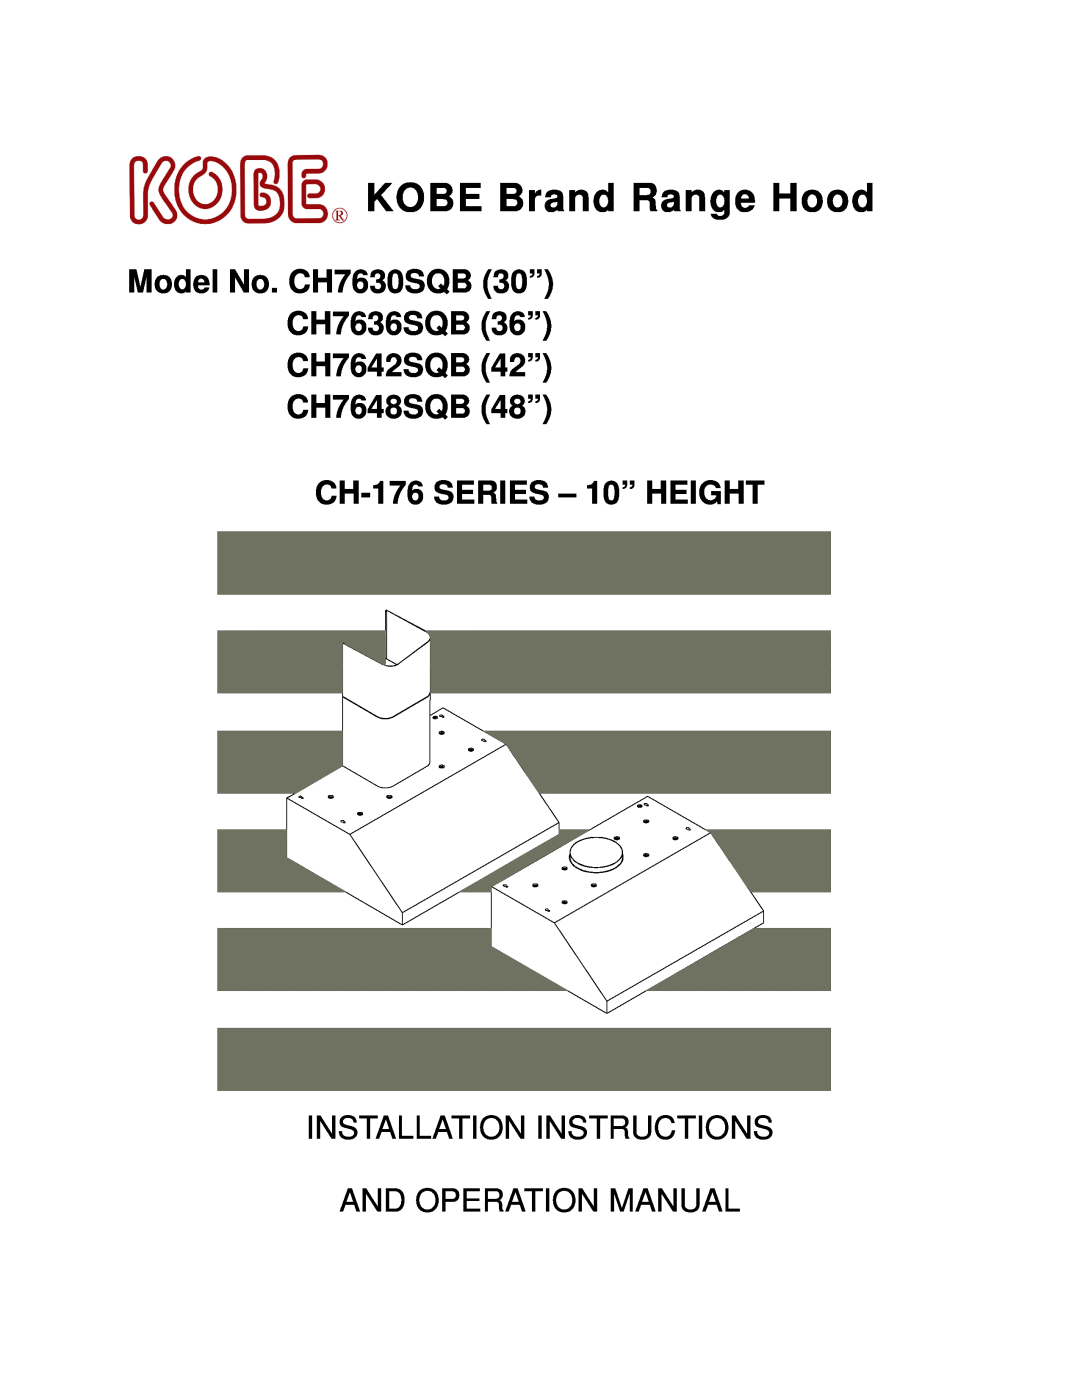 Kobe Range Hoods CH7648SQB, CH7642SQB installation instructions KOBE Brand Range Hood, CH-176 SERIES - 10” HEIGHT 